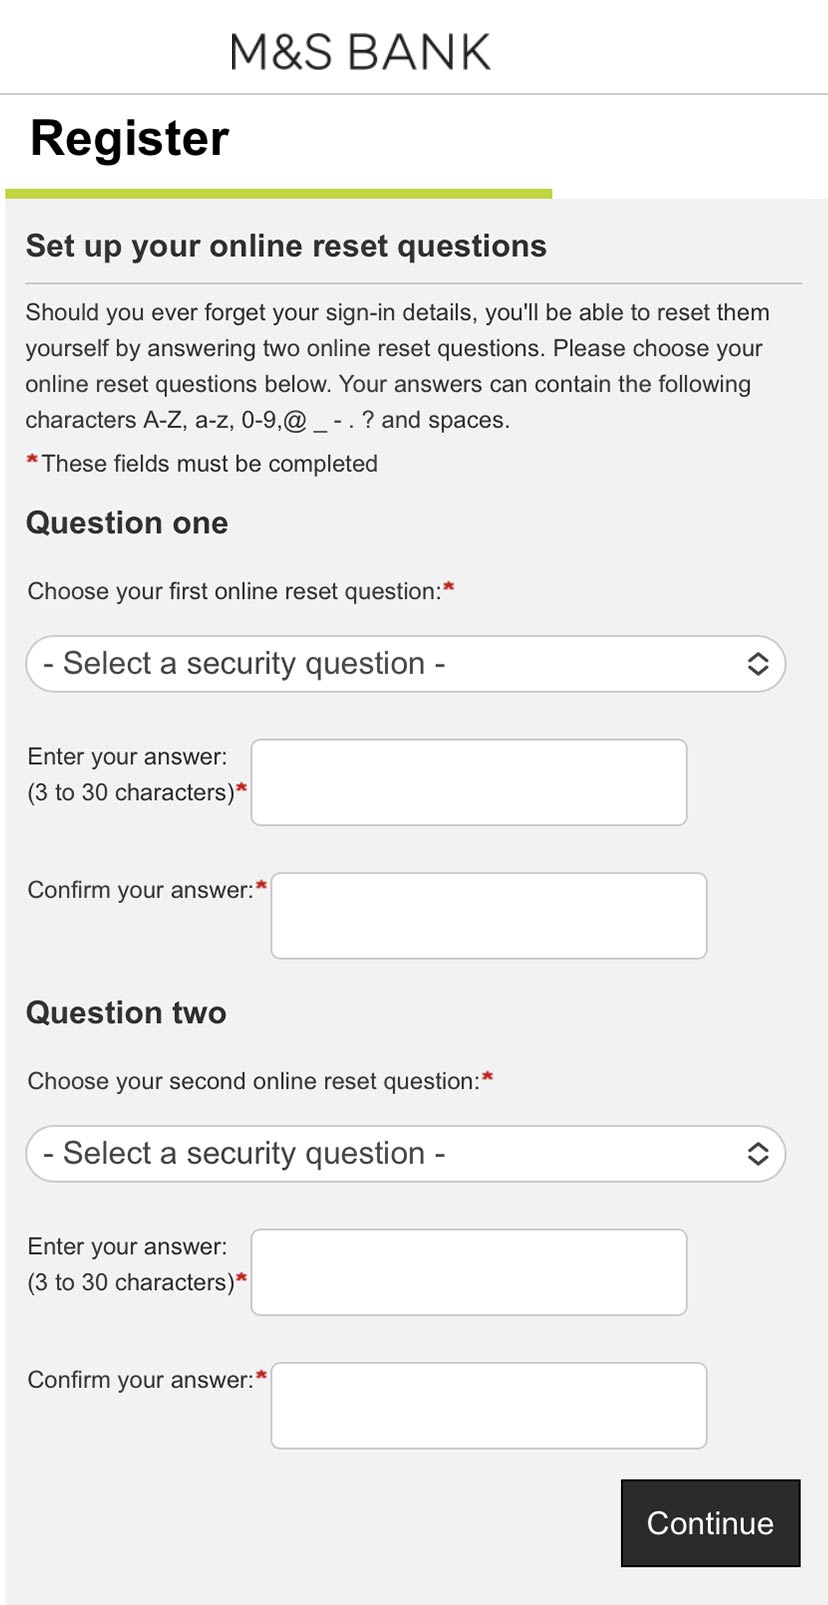 Internet Banking registration set up online reset questions screen.